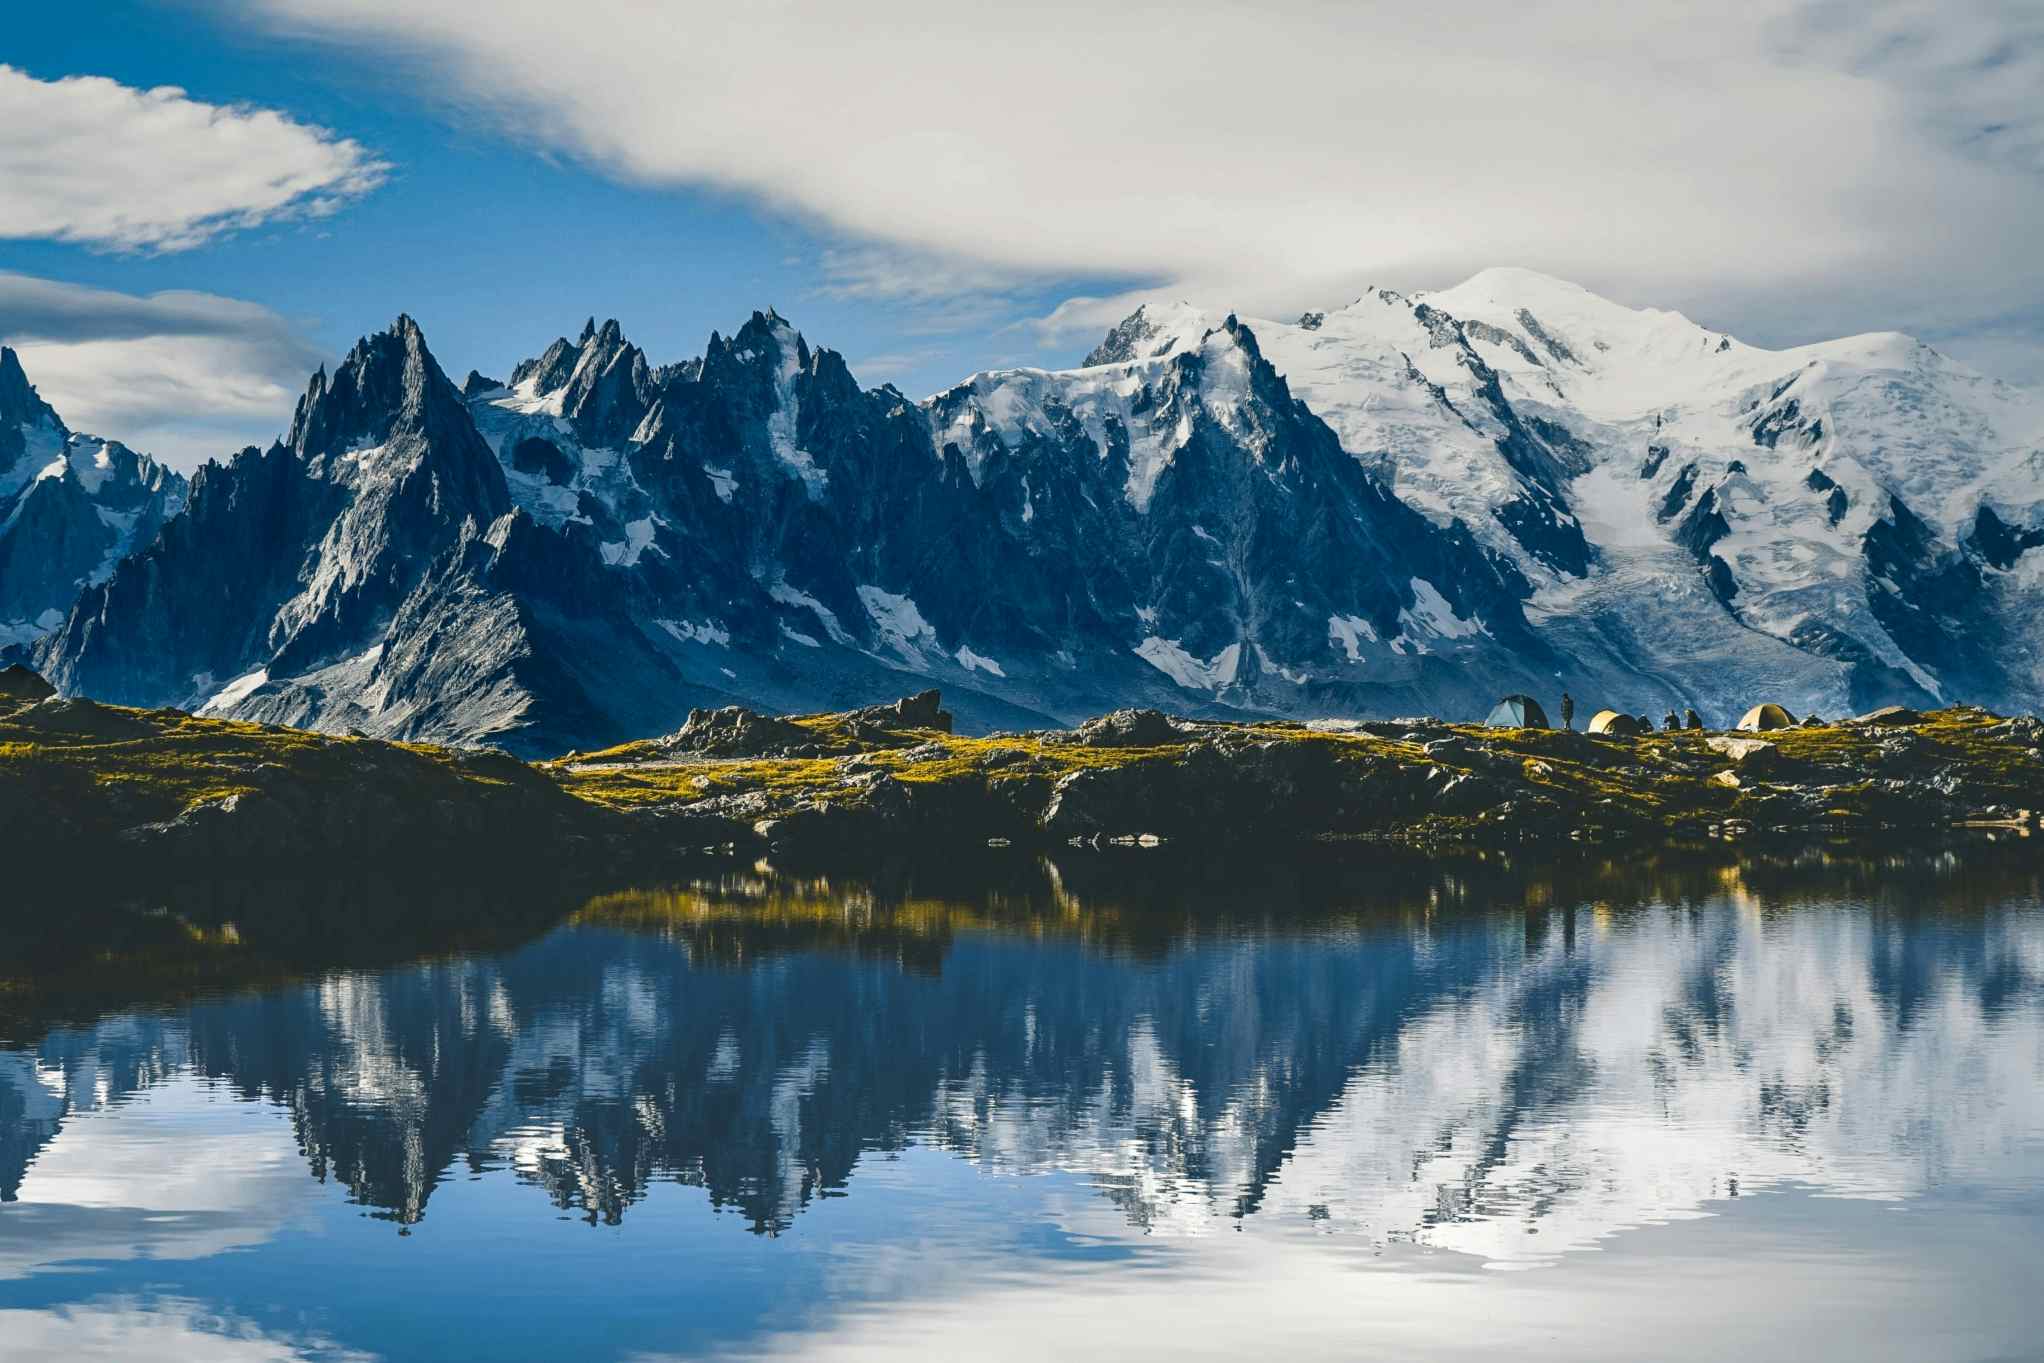 Lac Blanc, France on the Tour du Mont Blanc. Photo: Host/Altai France (file name referenced Marc Kargel/Unsplash)